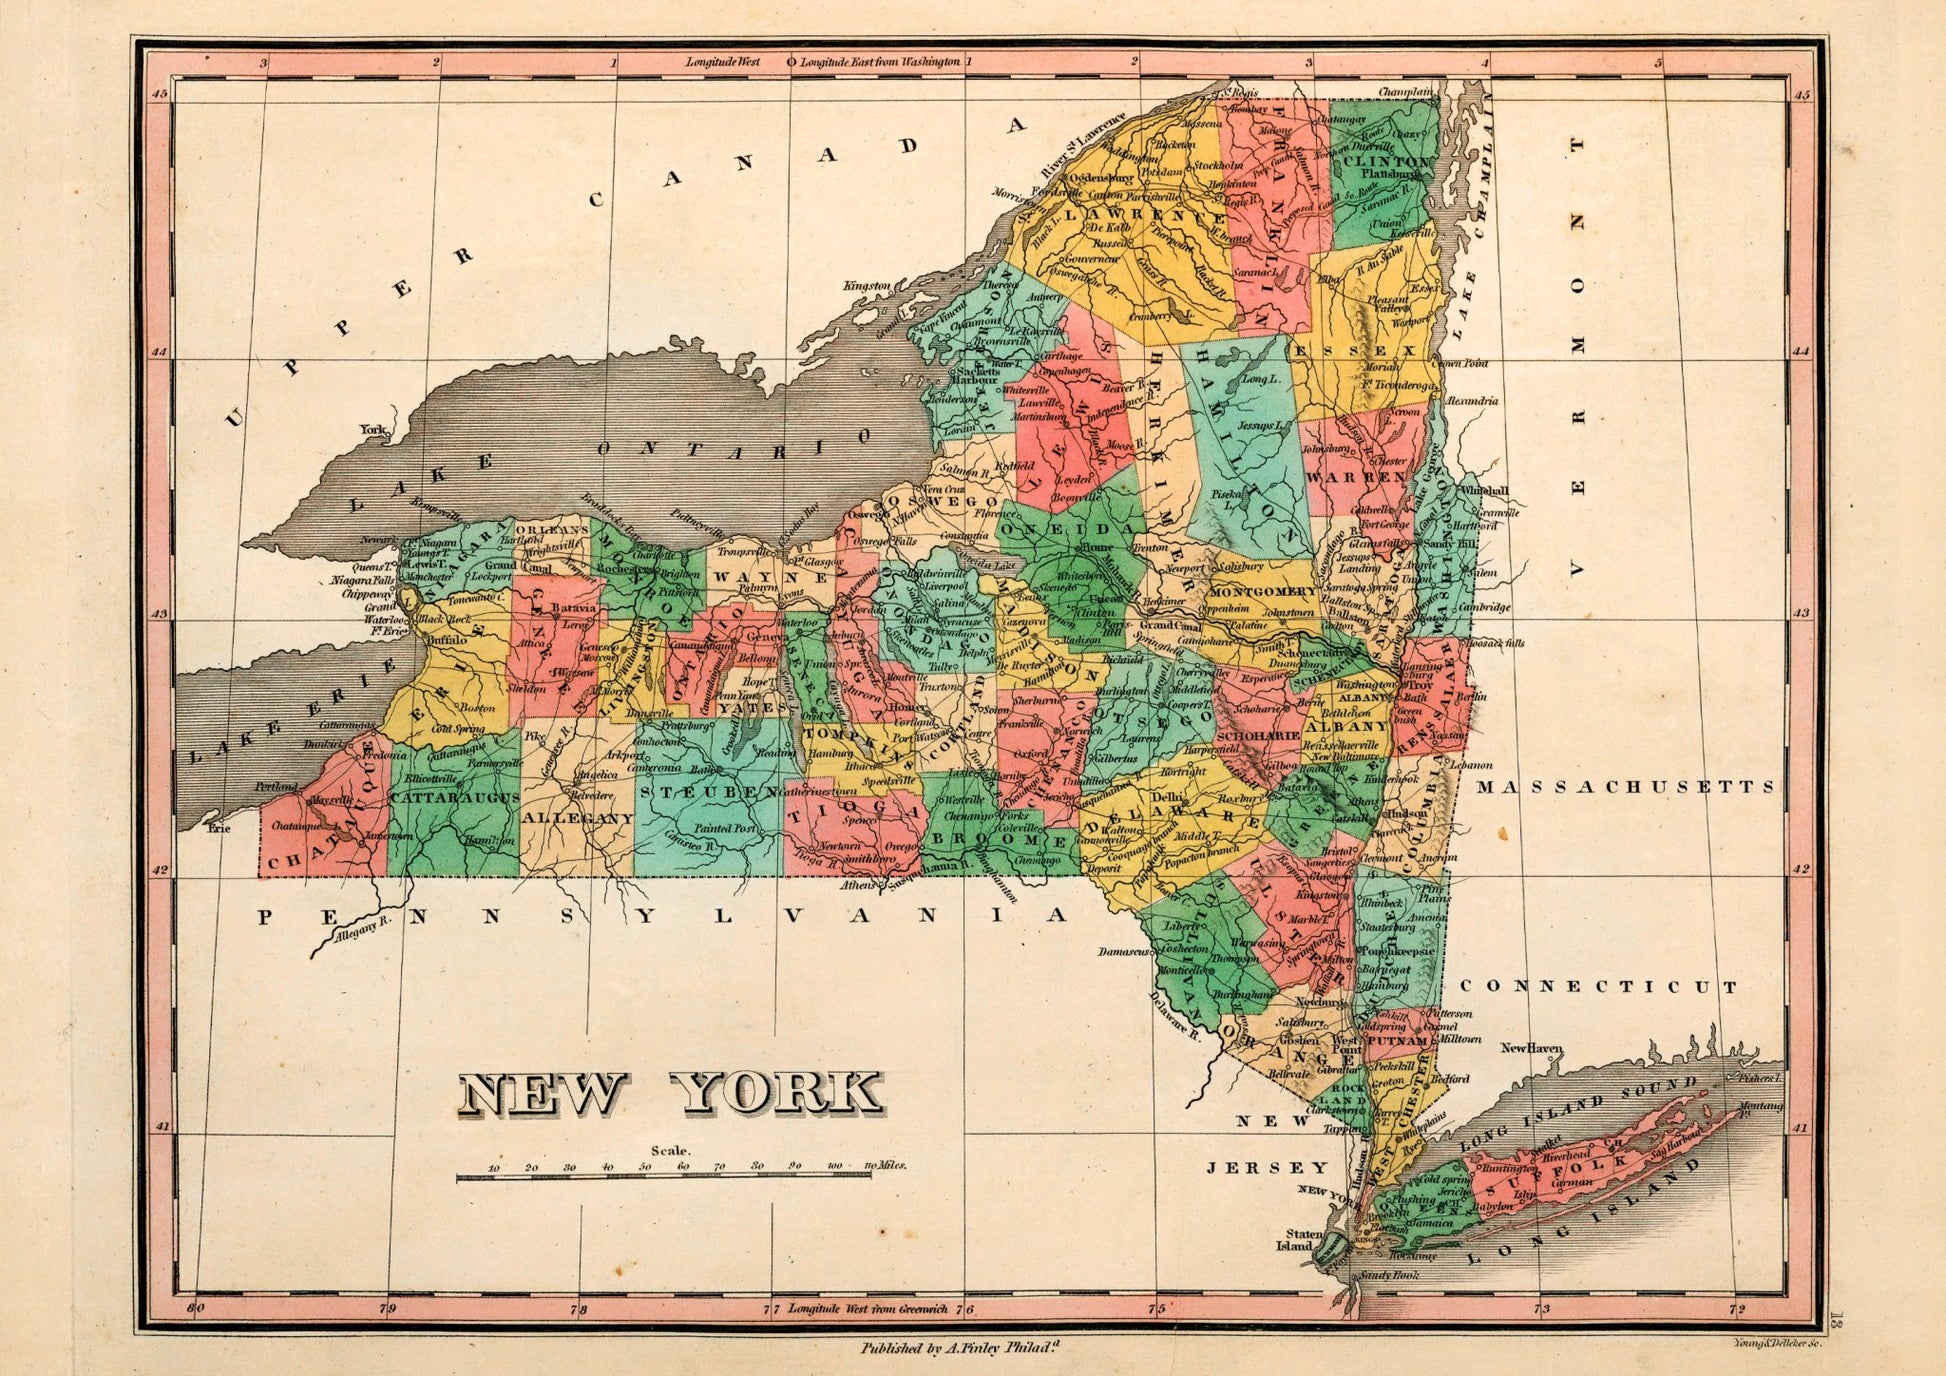 New York Historic Map - Amazing Maps